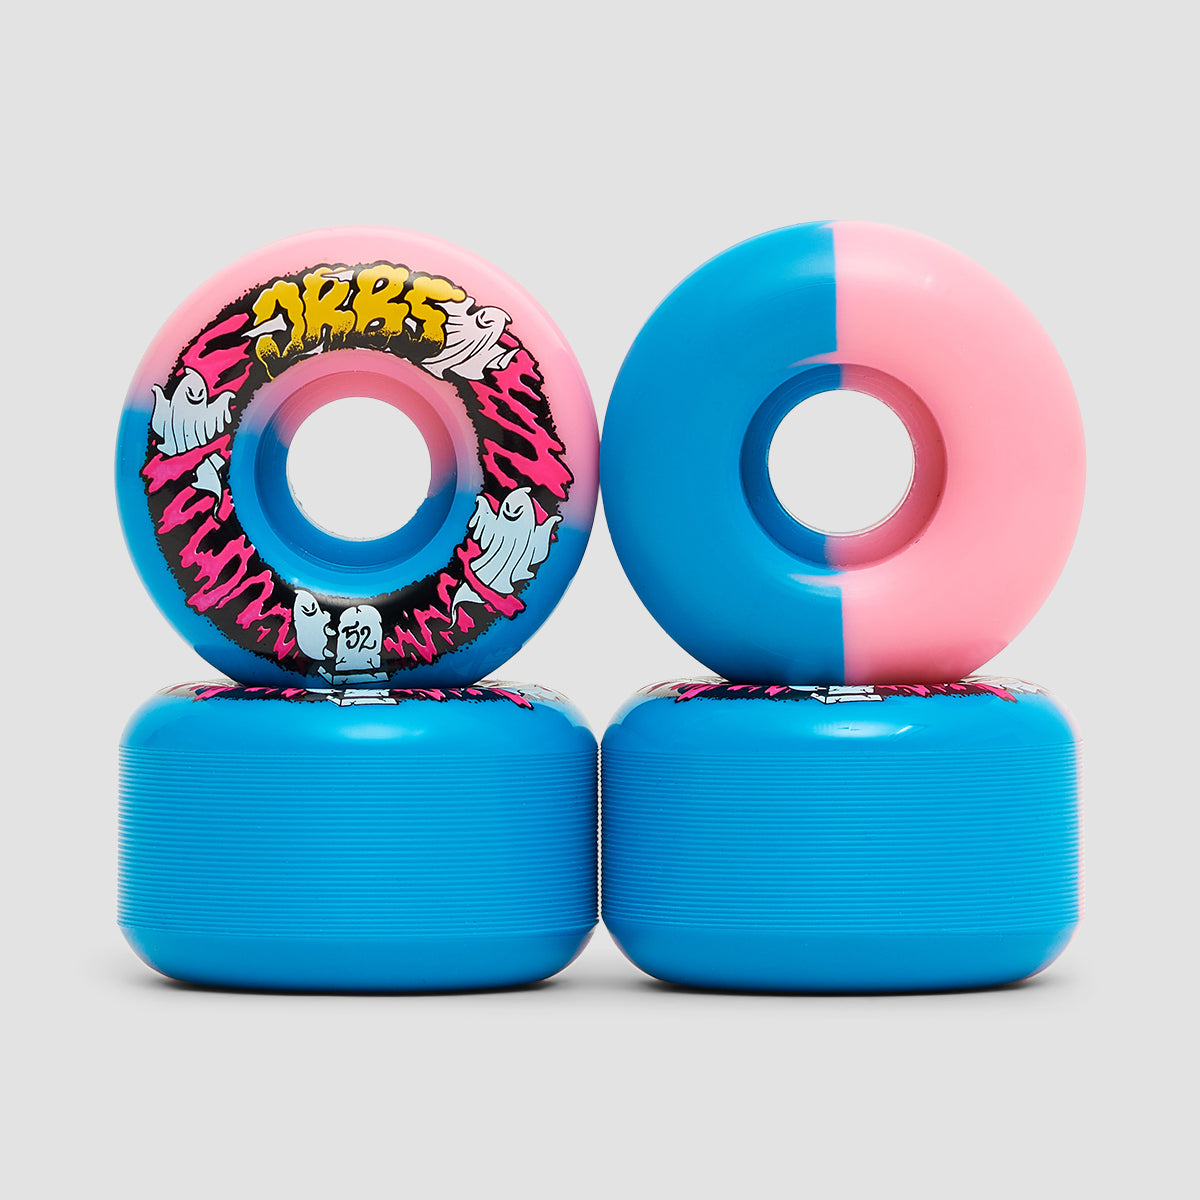 Welcome Orbs Apparitions Splits Round 99A Skateboard Wheels Pink/Blue Split 52mm